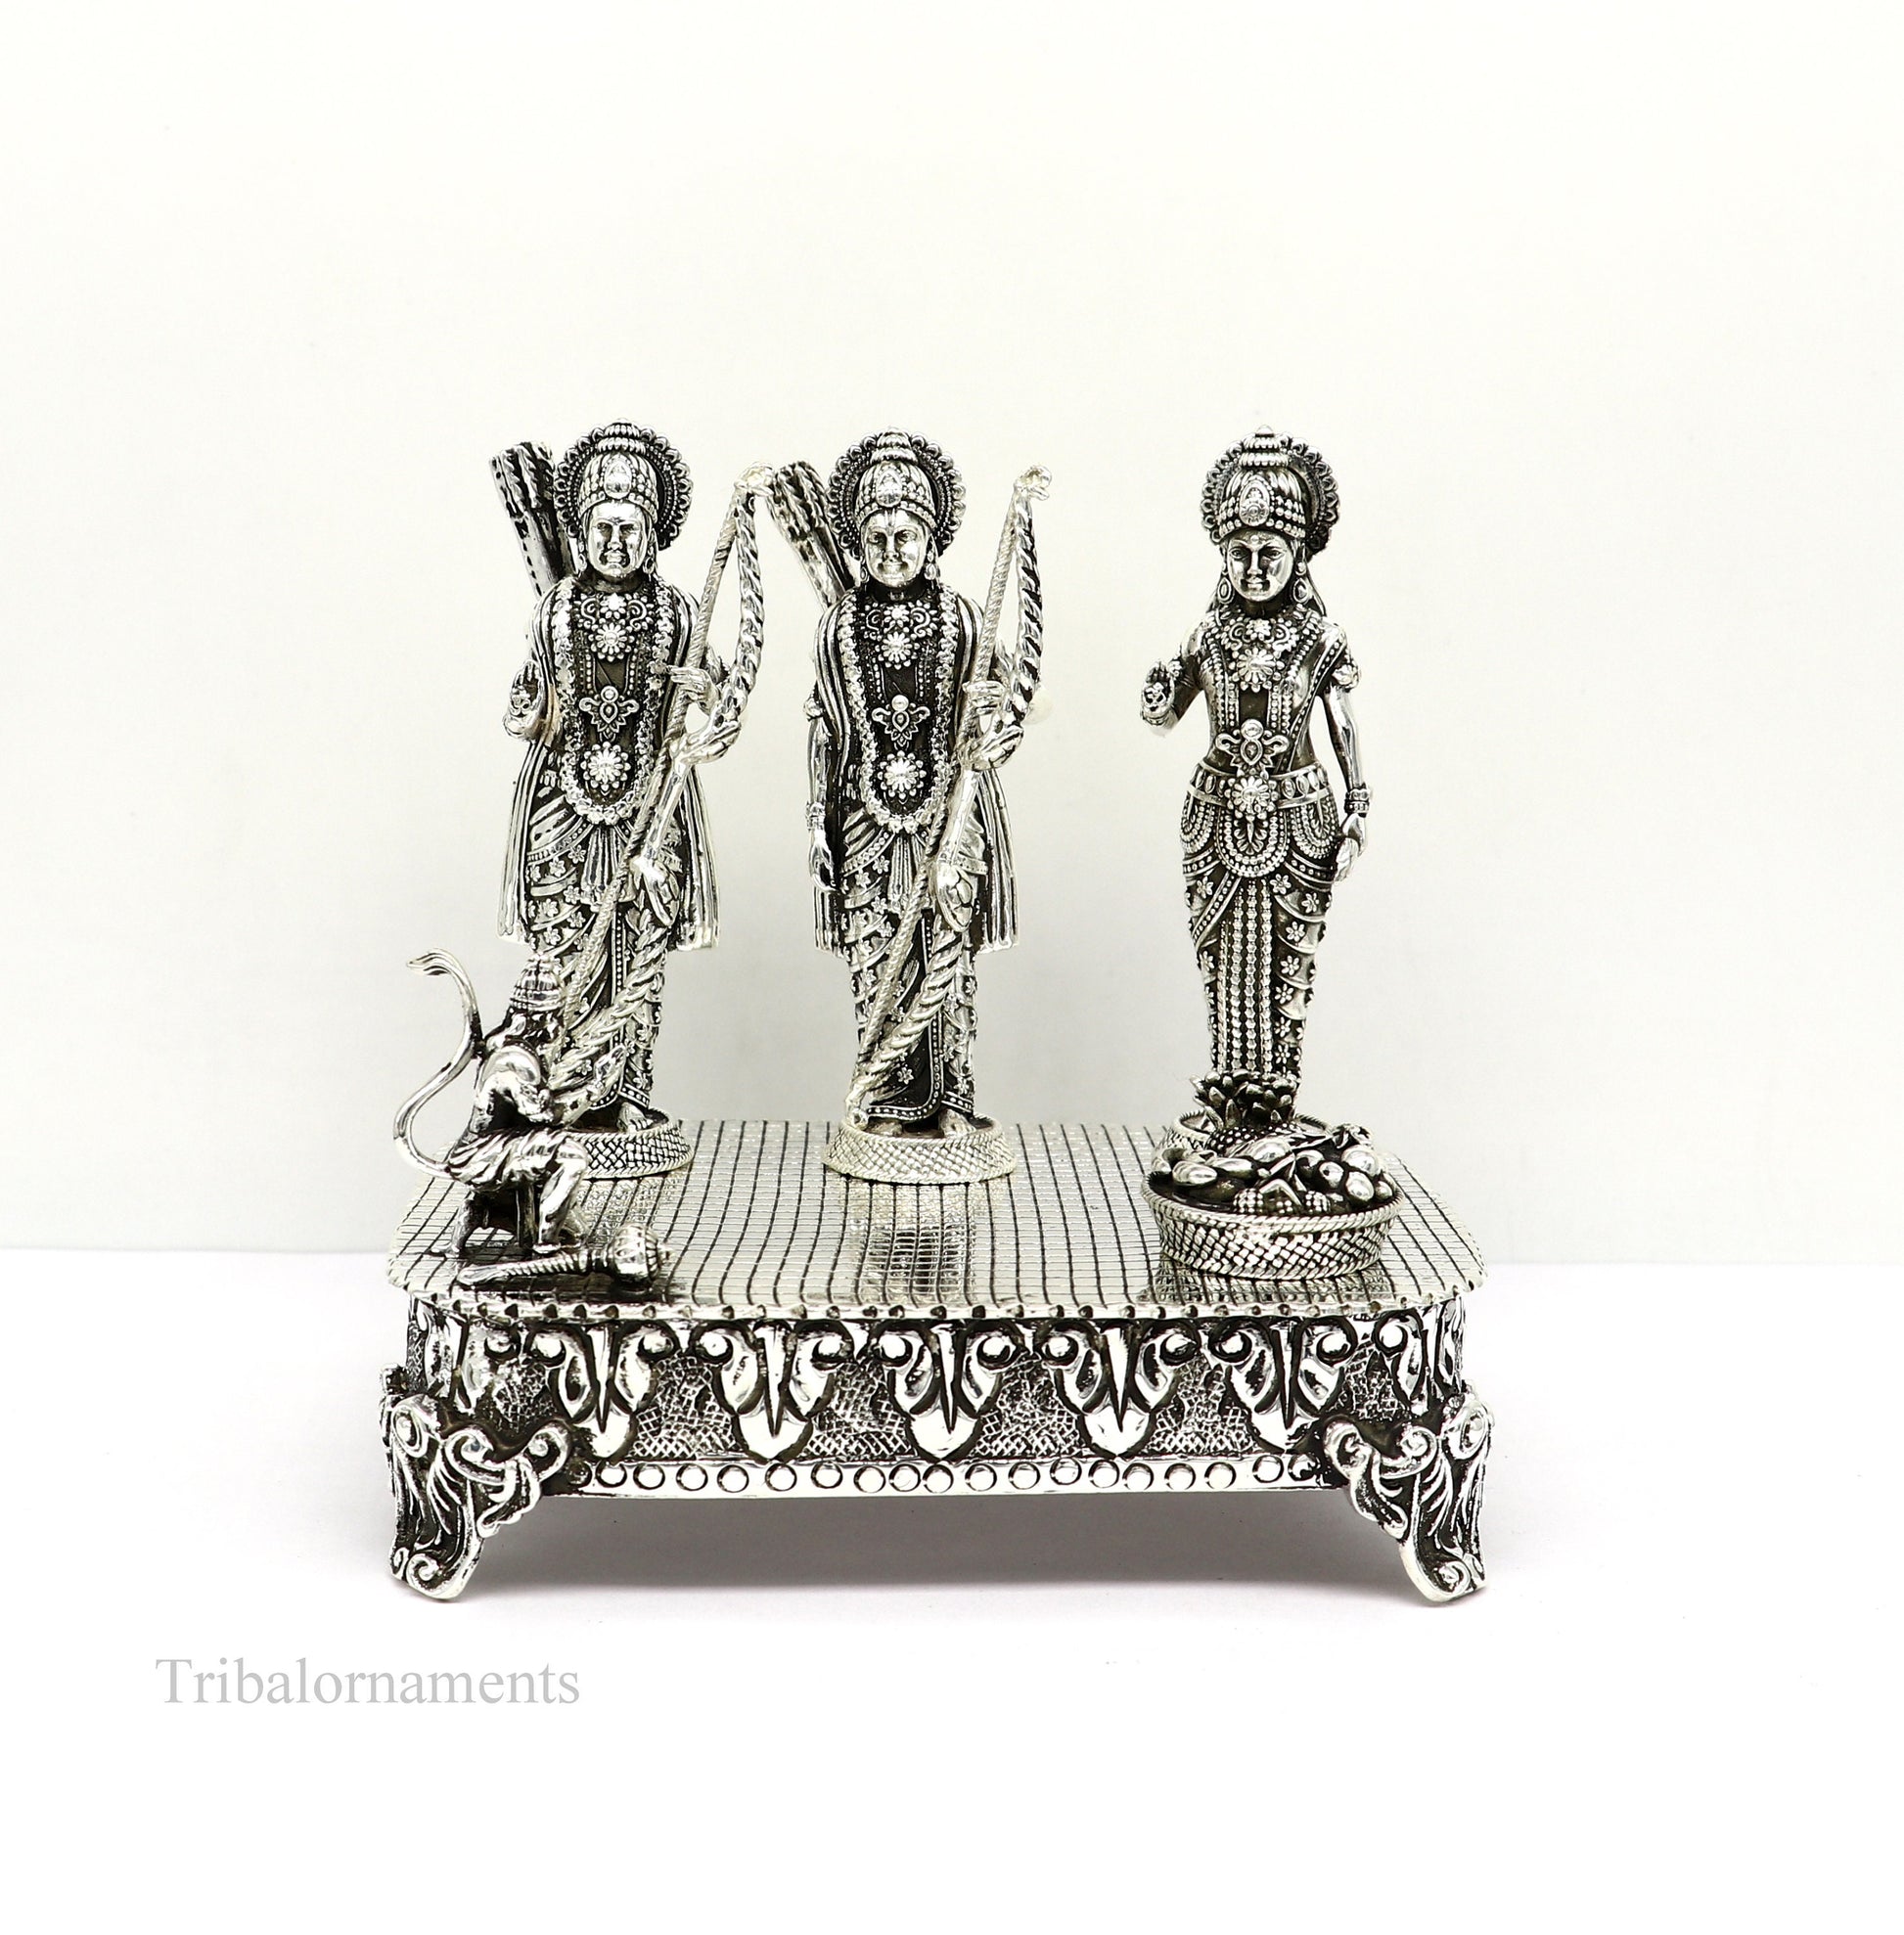 925 Sterling silver Silver Idols Sri Ram Darbar, Lord Shri Rama family, laxman and Seeta, handcrafted statue sculpture gifting art art119 - TRIBAL ORNAMENTS